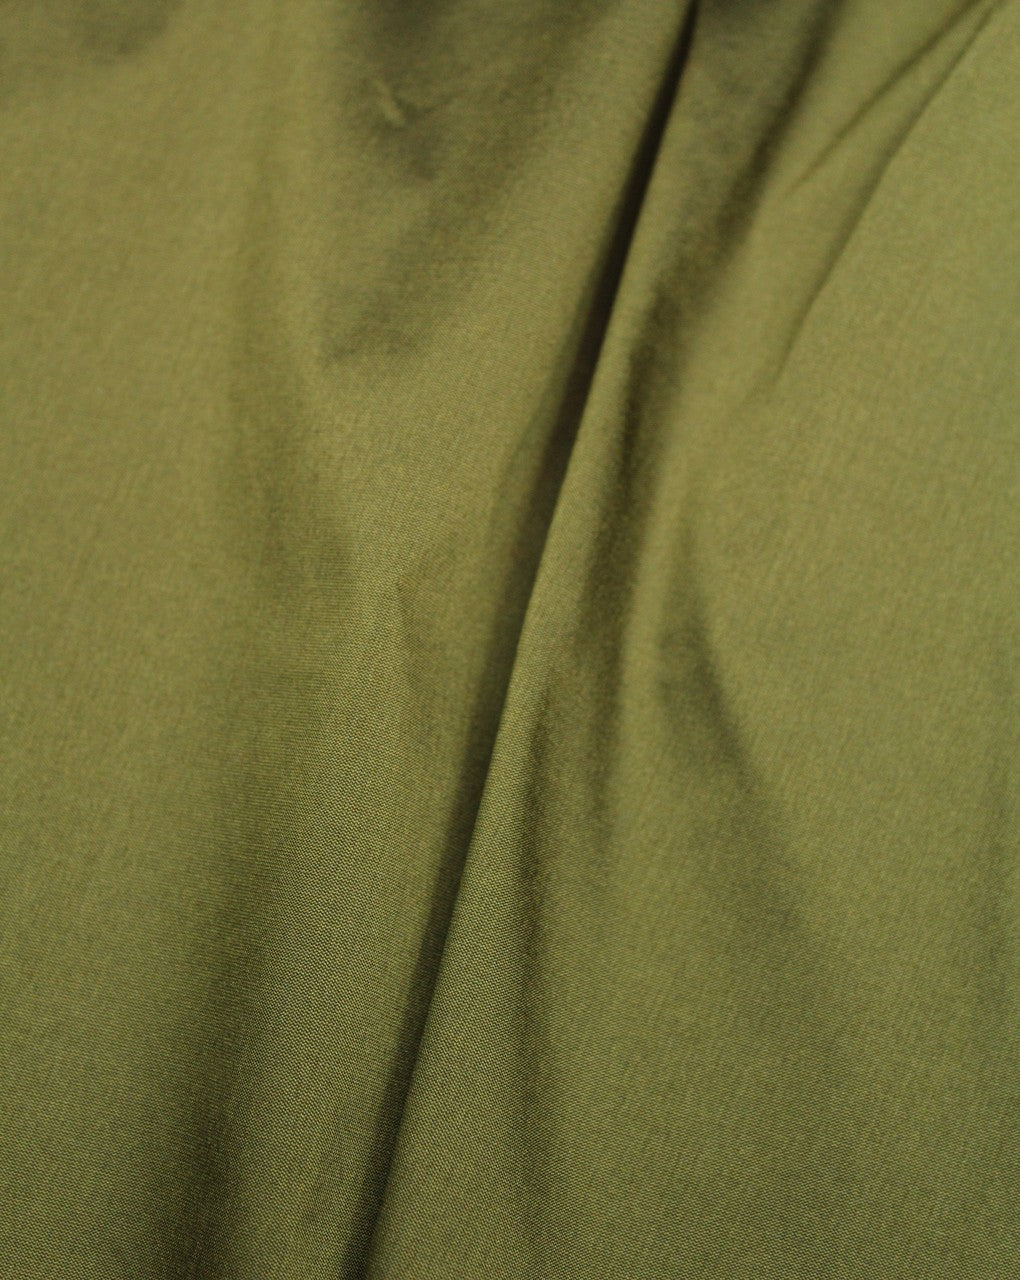 Plain Green Polyester Taffeta Fabric